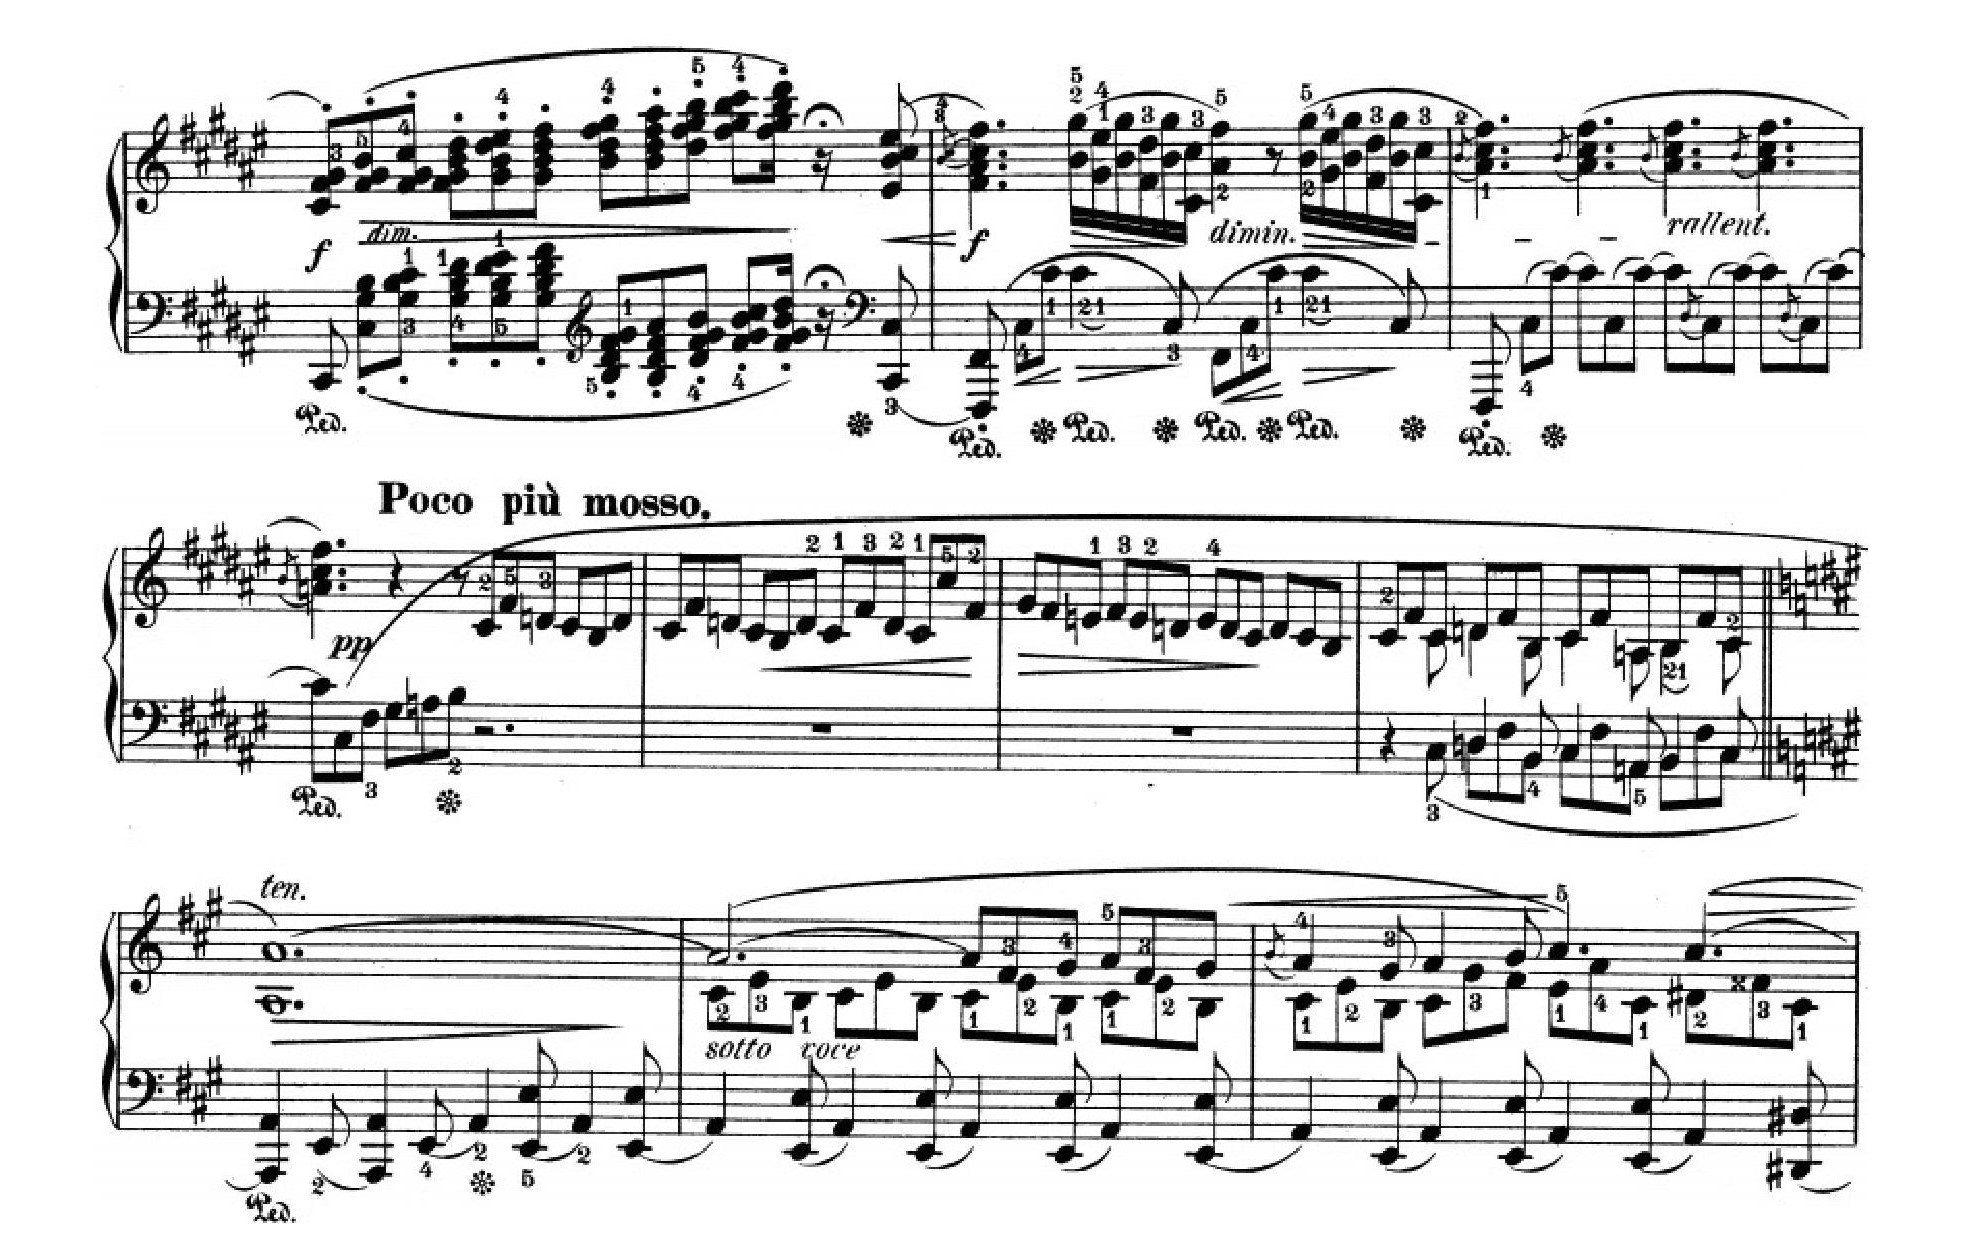 Fig. 5: Chopin: Barcarolle, c. 32-41.